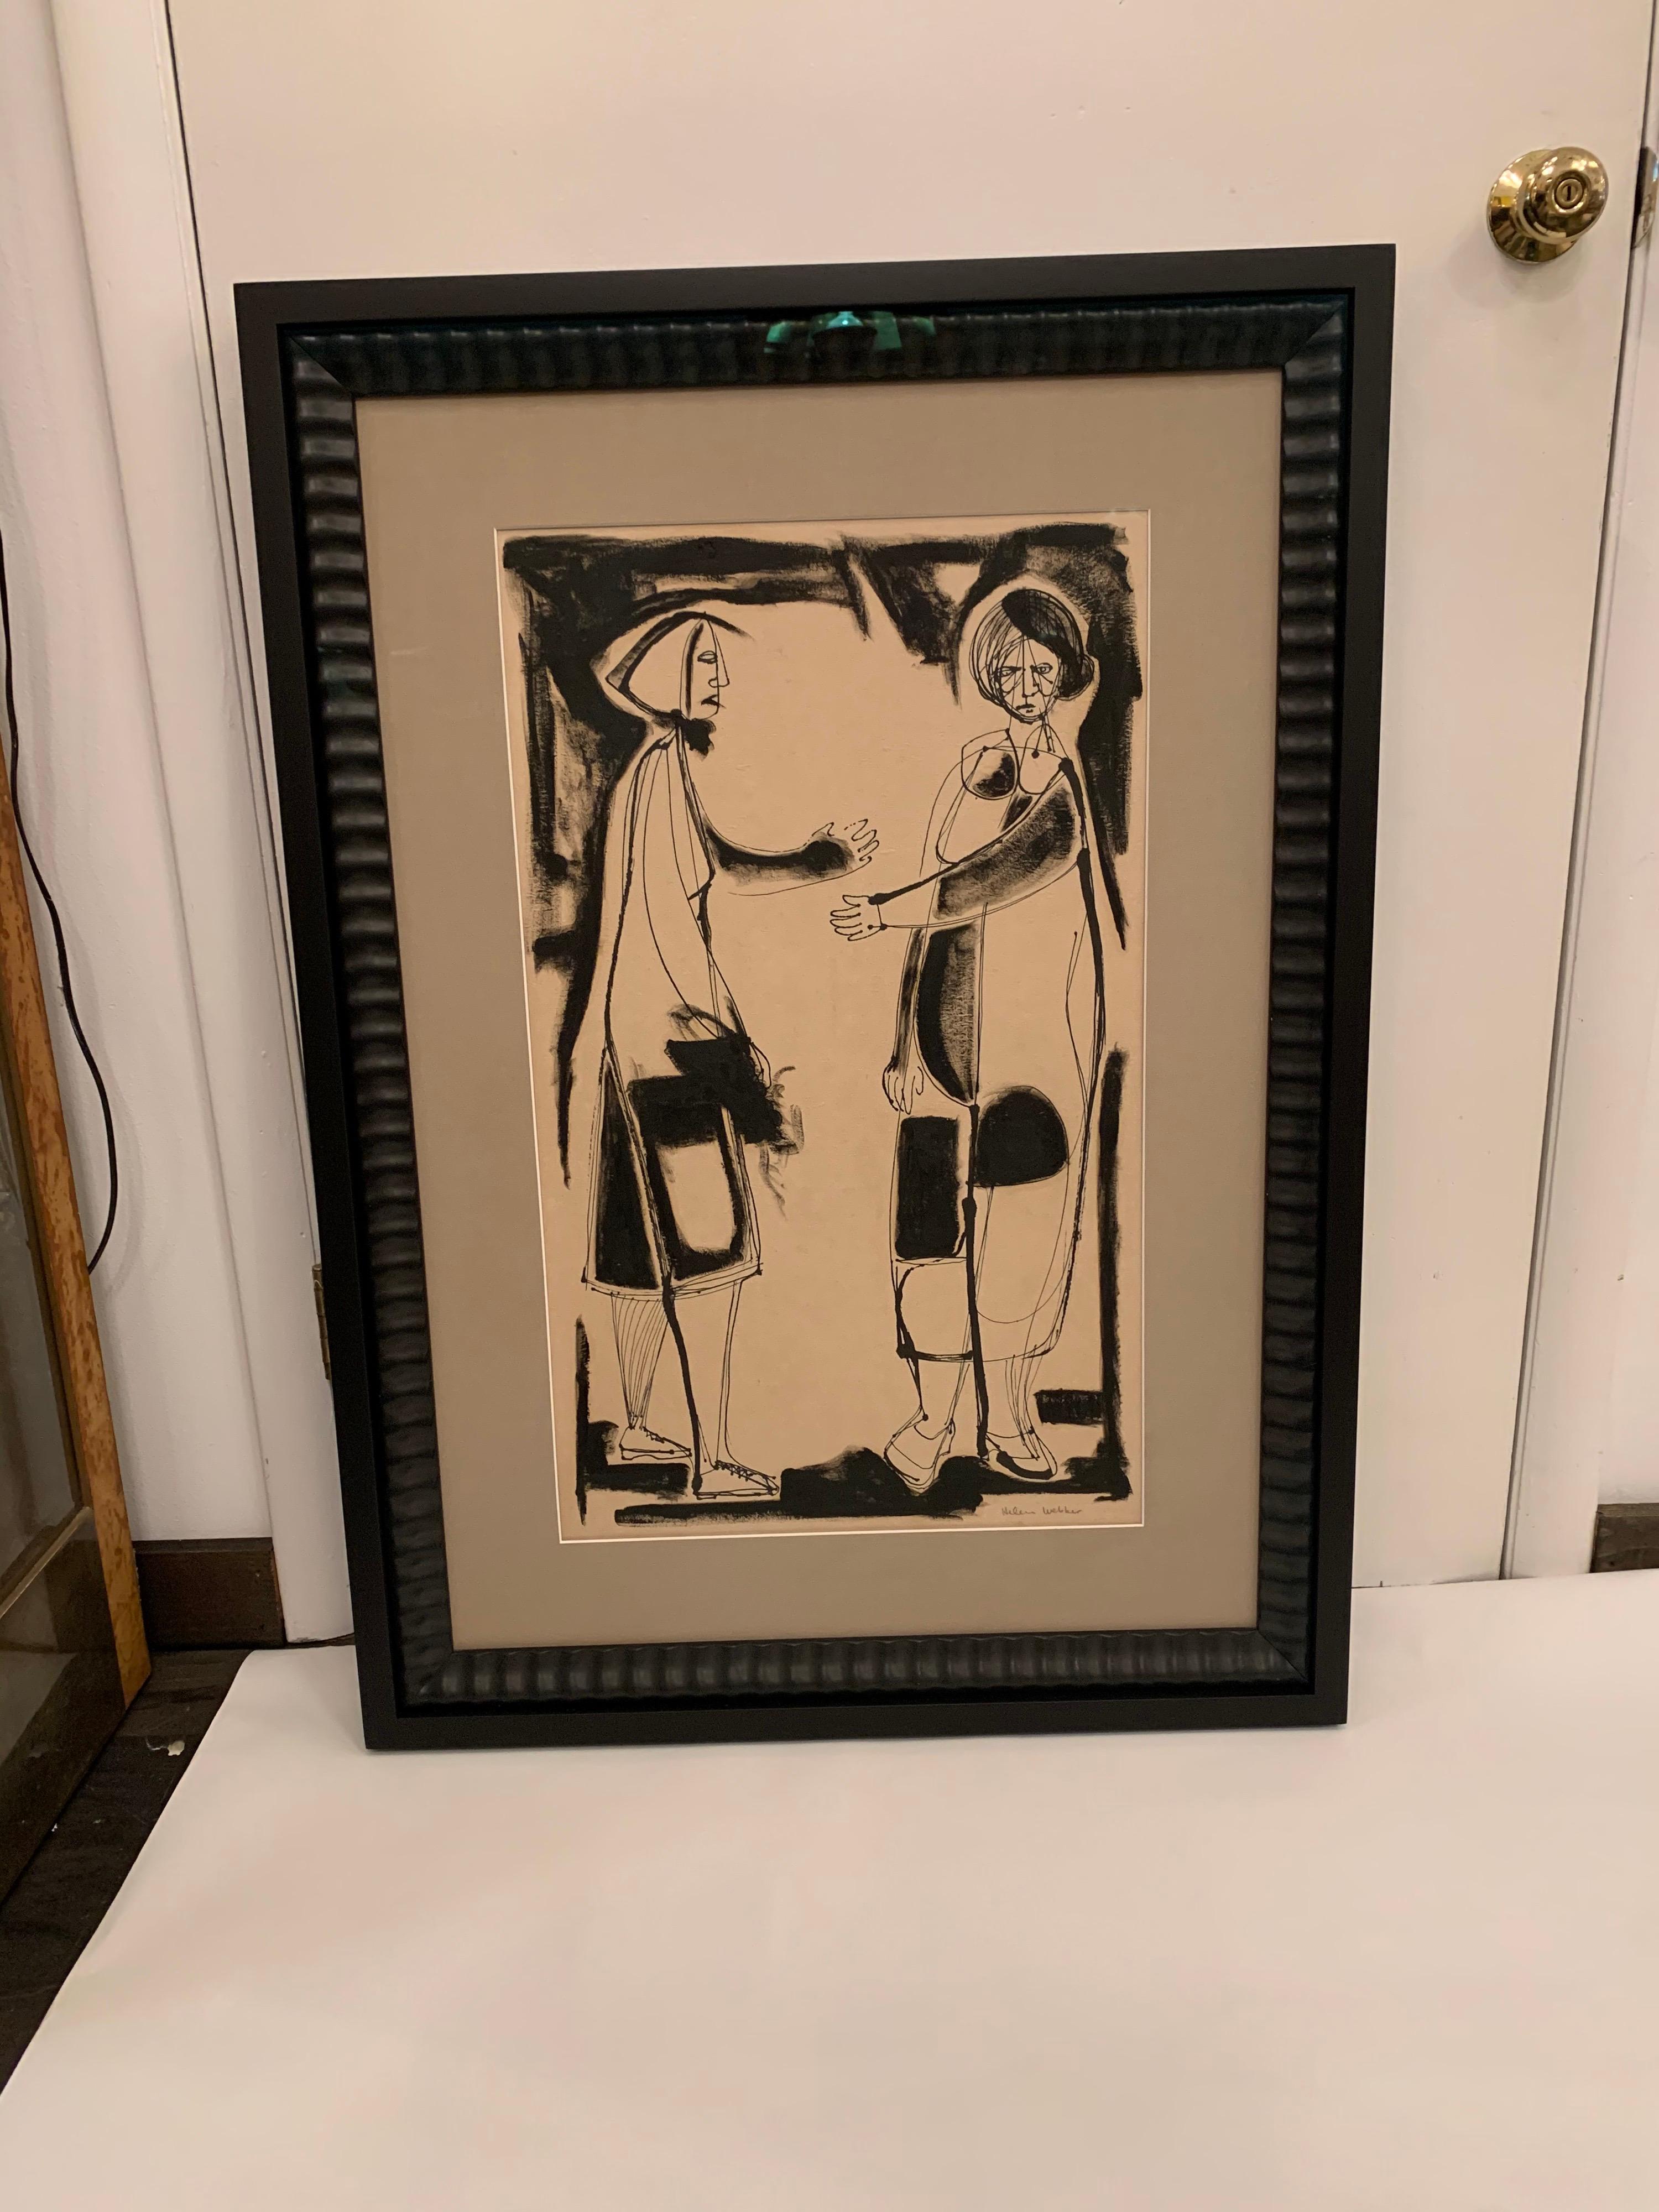 Glass Helen Webber Original Painting in Gallery Frame For Sale